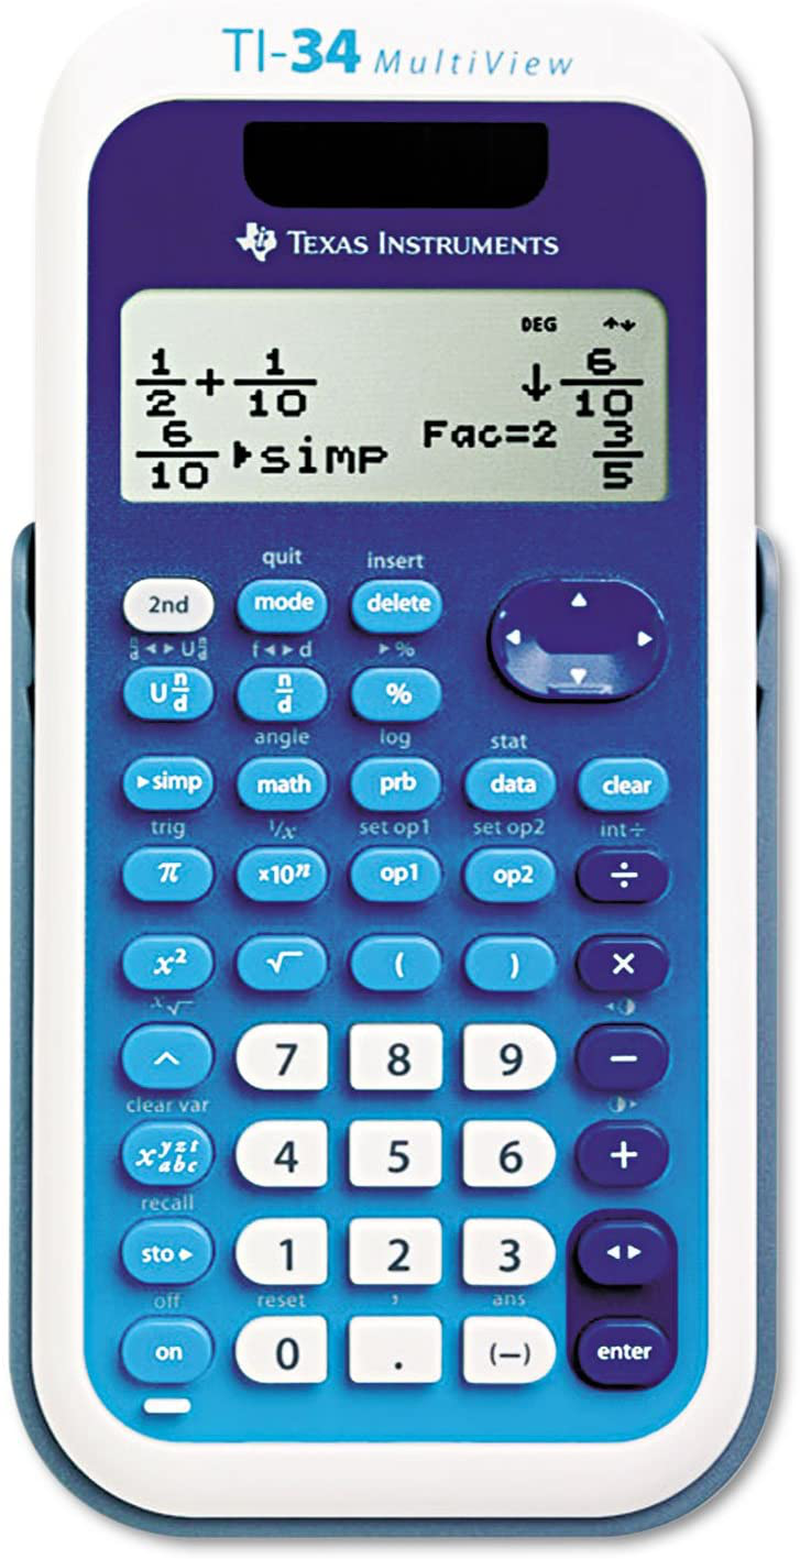 TEXTI34MULTIV - Texas Instruments TI-34 MultiView Scientific Calculator